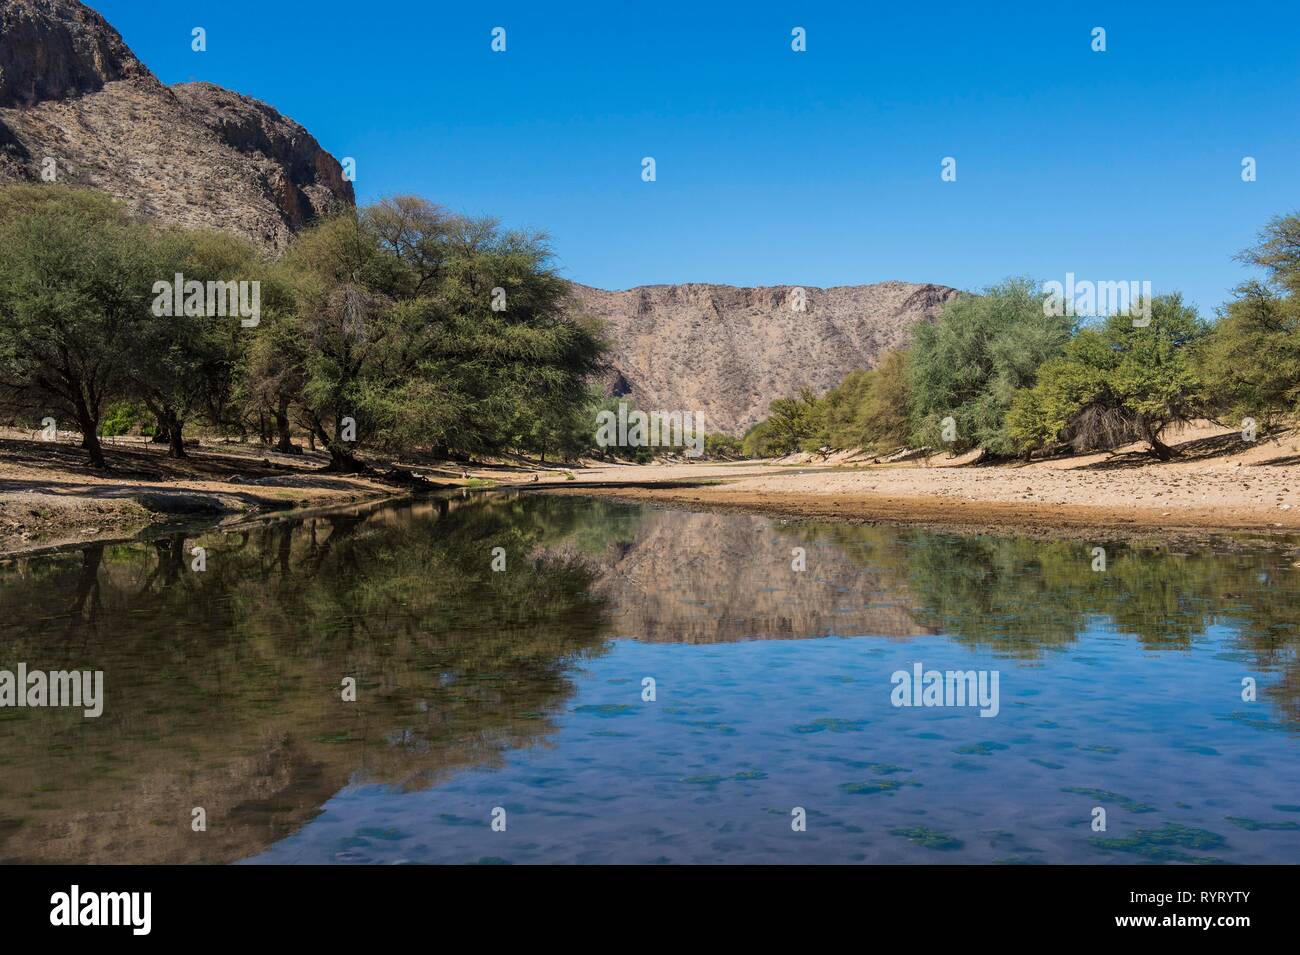 Valley with Khowarib river, Damaraland, Namibia Stock Photo